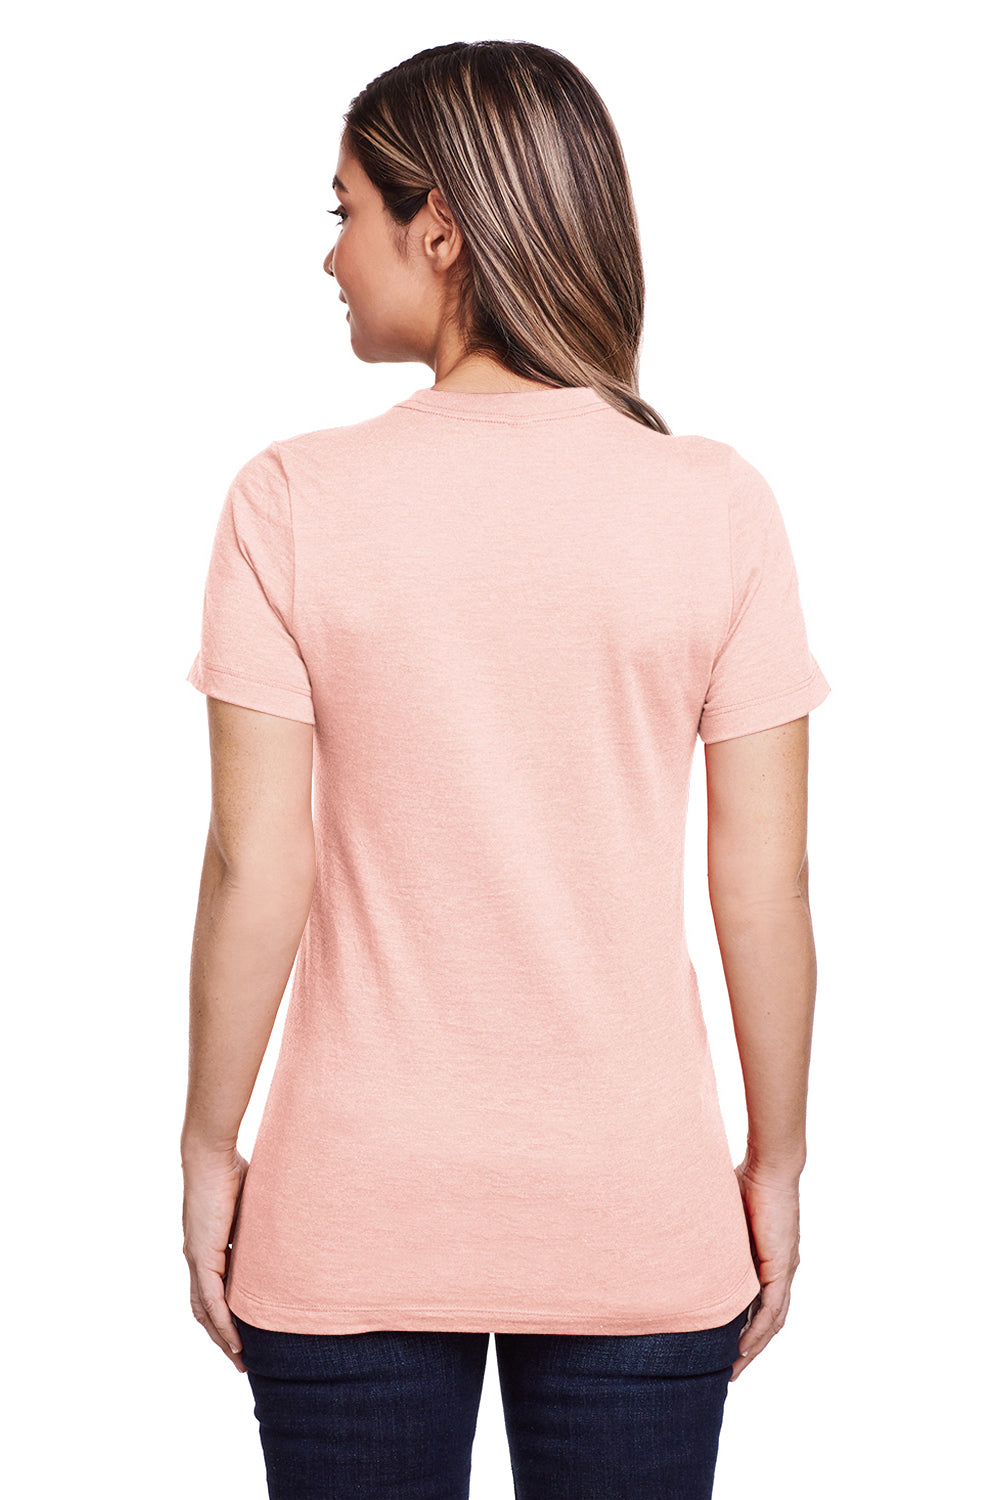 Gildan G670L Womens Softstyle CVC Short Sleeve Crewneck T-Shirt Dusty Rose Pink Back